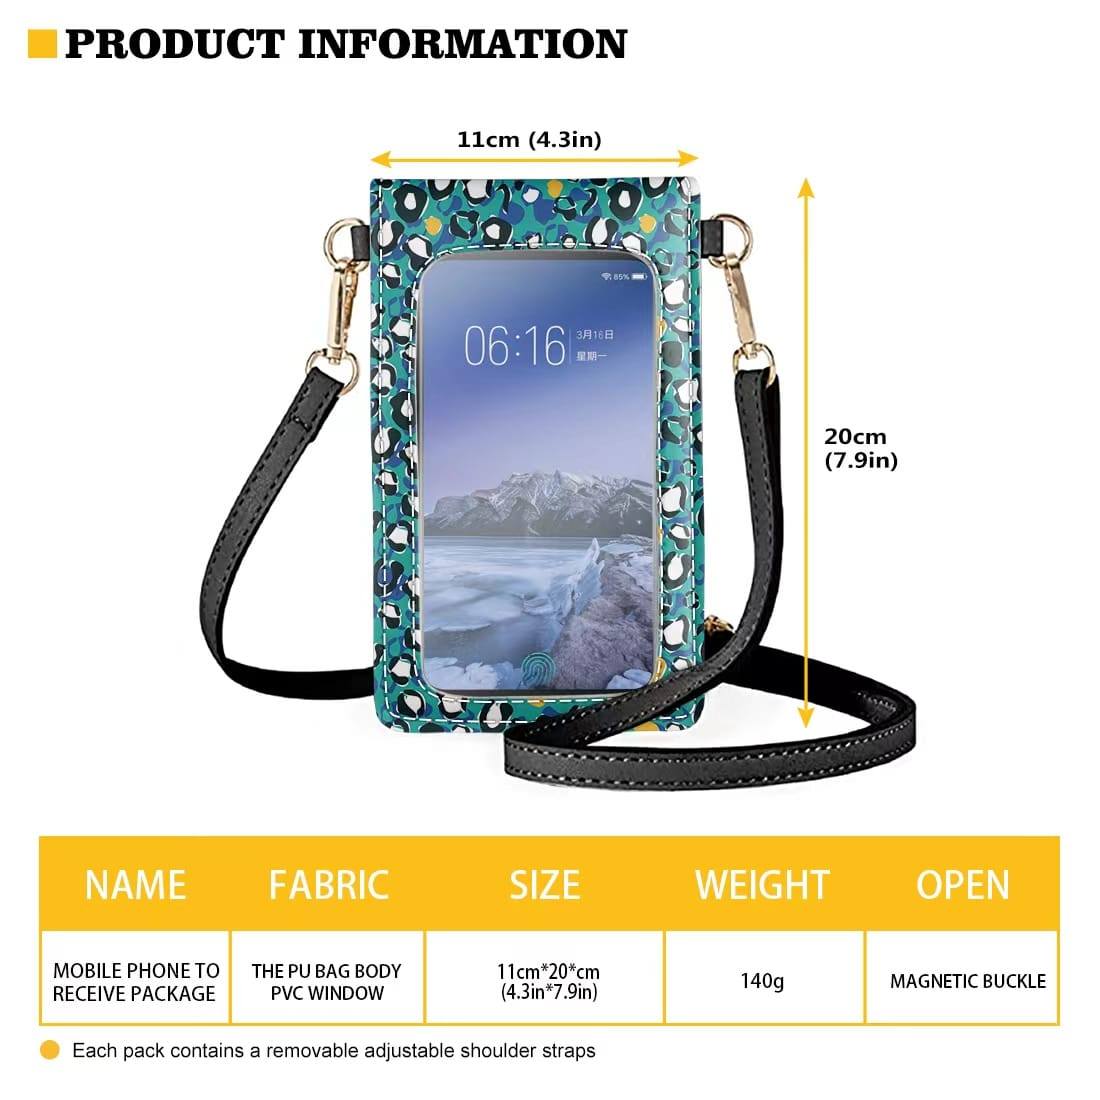 Sunflower Phone Crossbody Bag Preorder - Closing 5/5 - ETA Early June